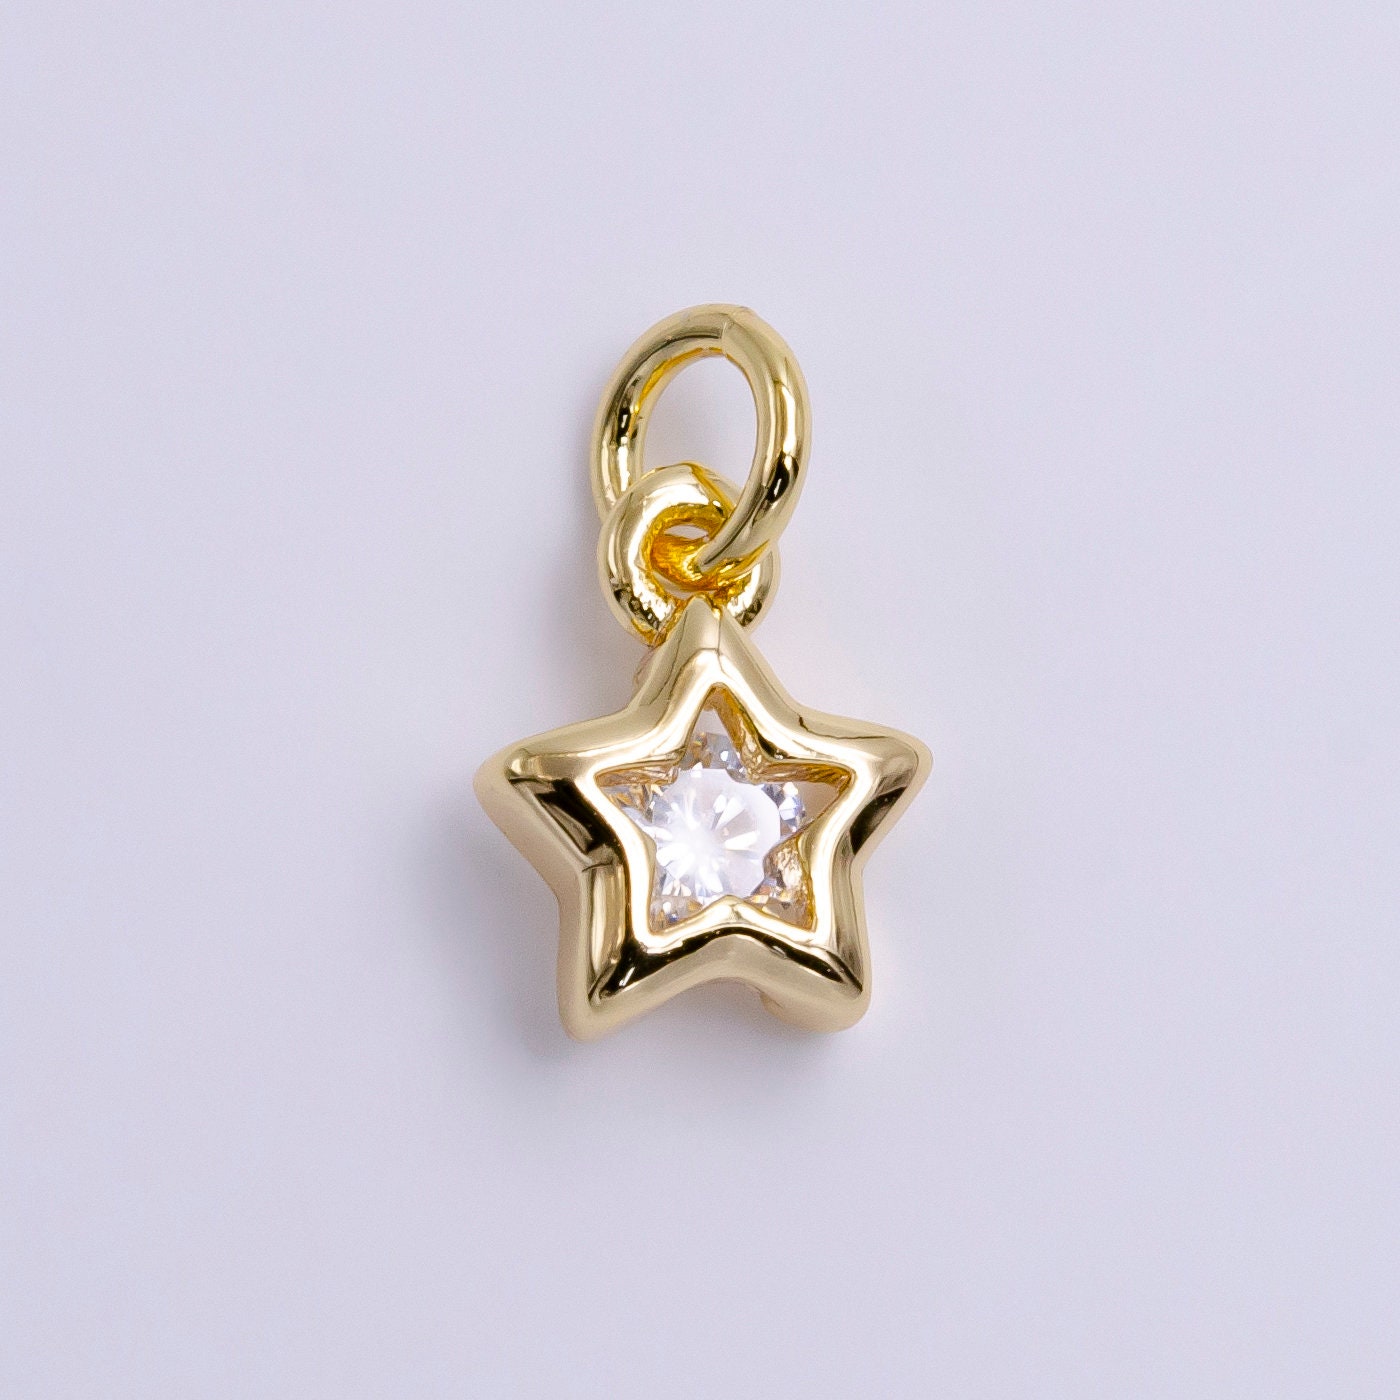 Mini Star Charms | Enameled Star Charm | Enamel Pendant | Tiny Star Drops | Kawaii Planner Charm | Pastel Kei Jewellery Making (5pcs / Gold & White /